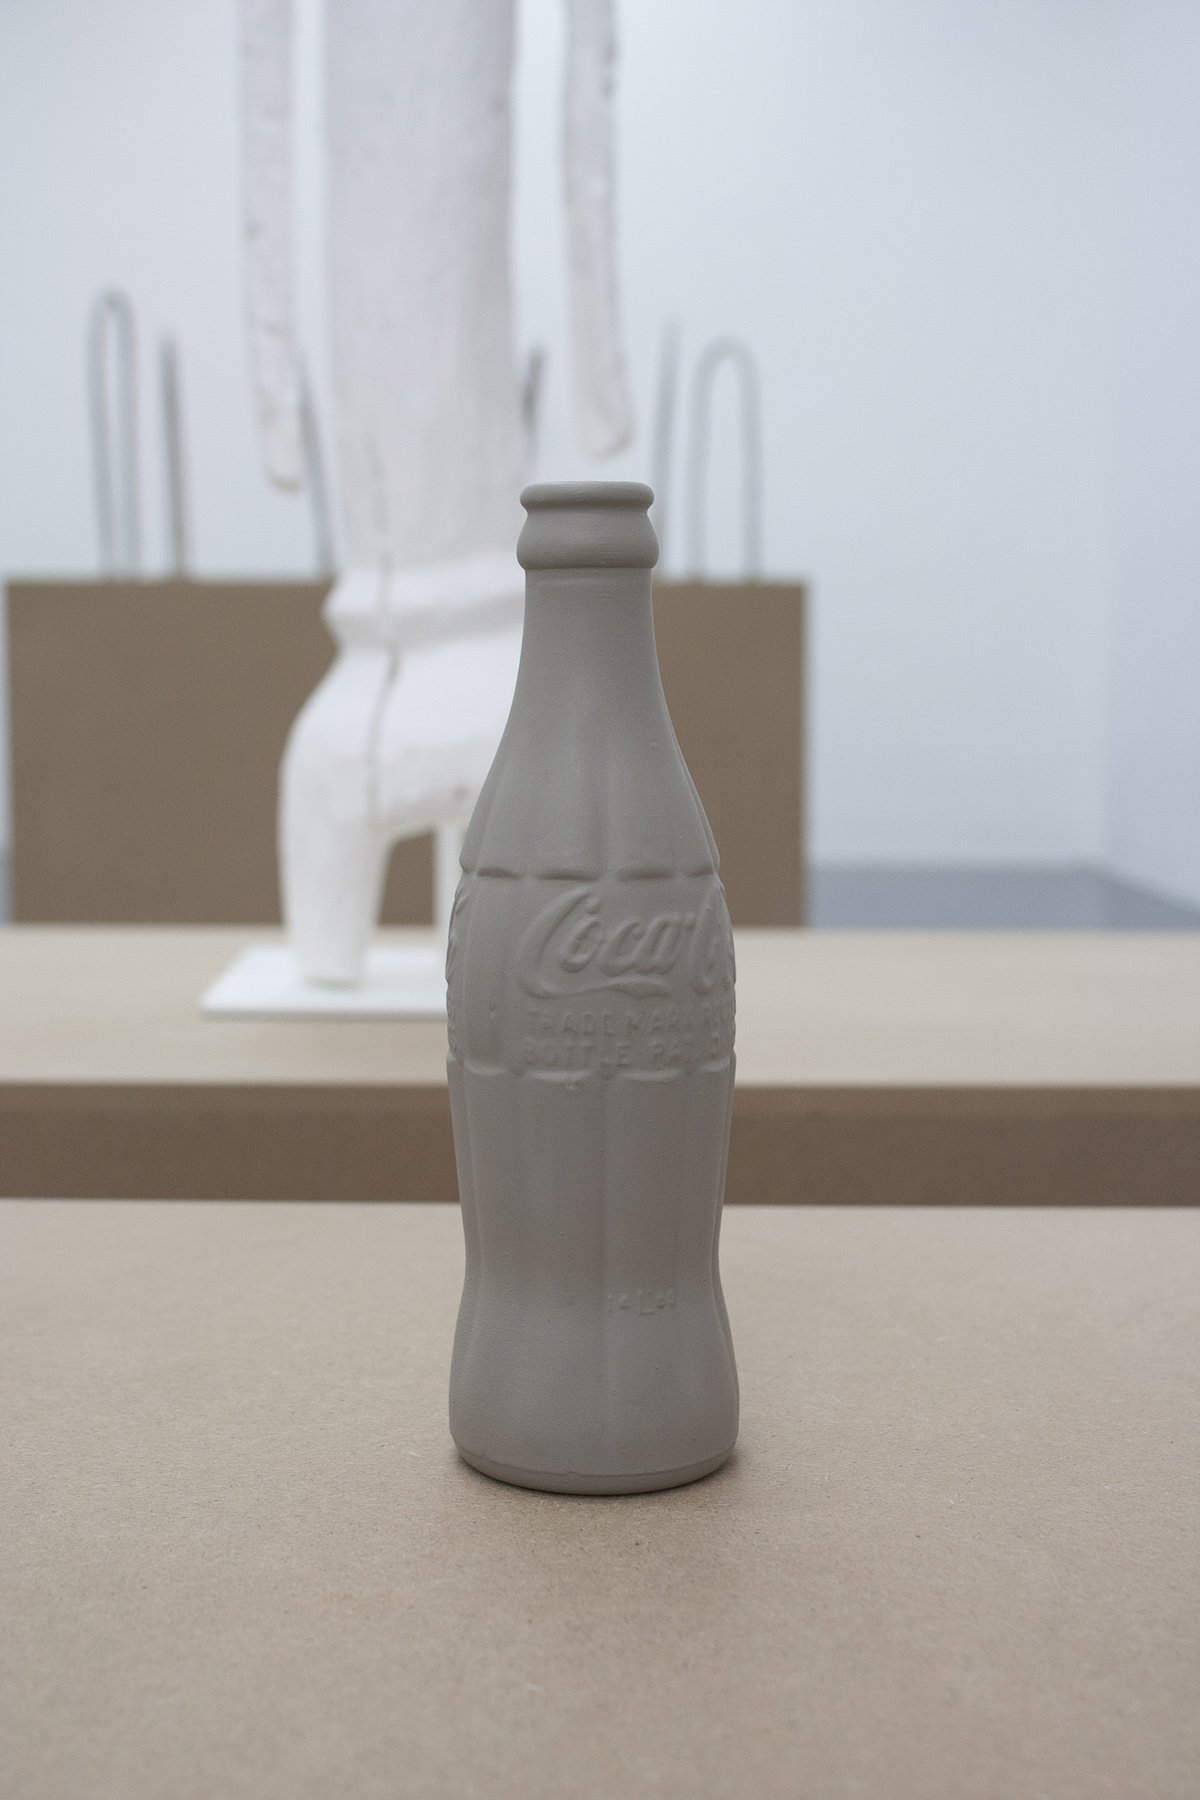 Gaylen GerberSupport n.d.Oil paint on Coca-Cola contour bottle (SALEM DEPOT, N.H.), United States, glass, 20th century20 x 6.5 cm